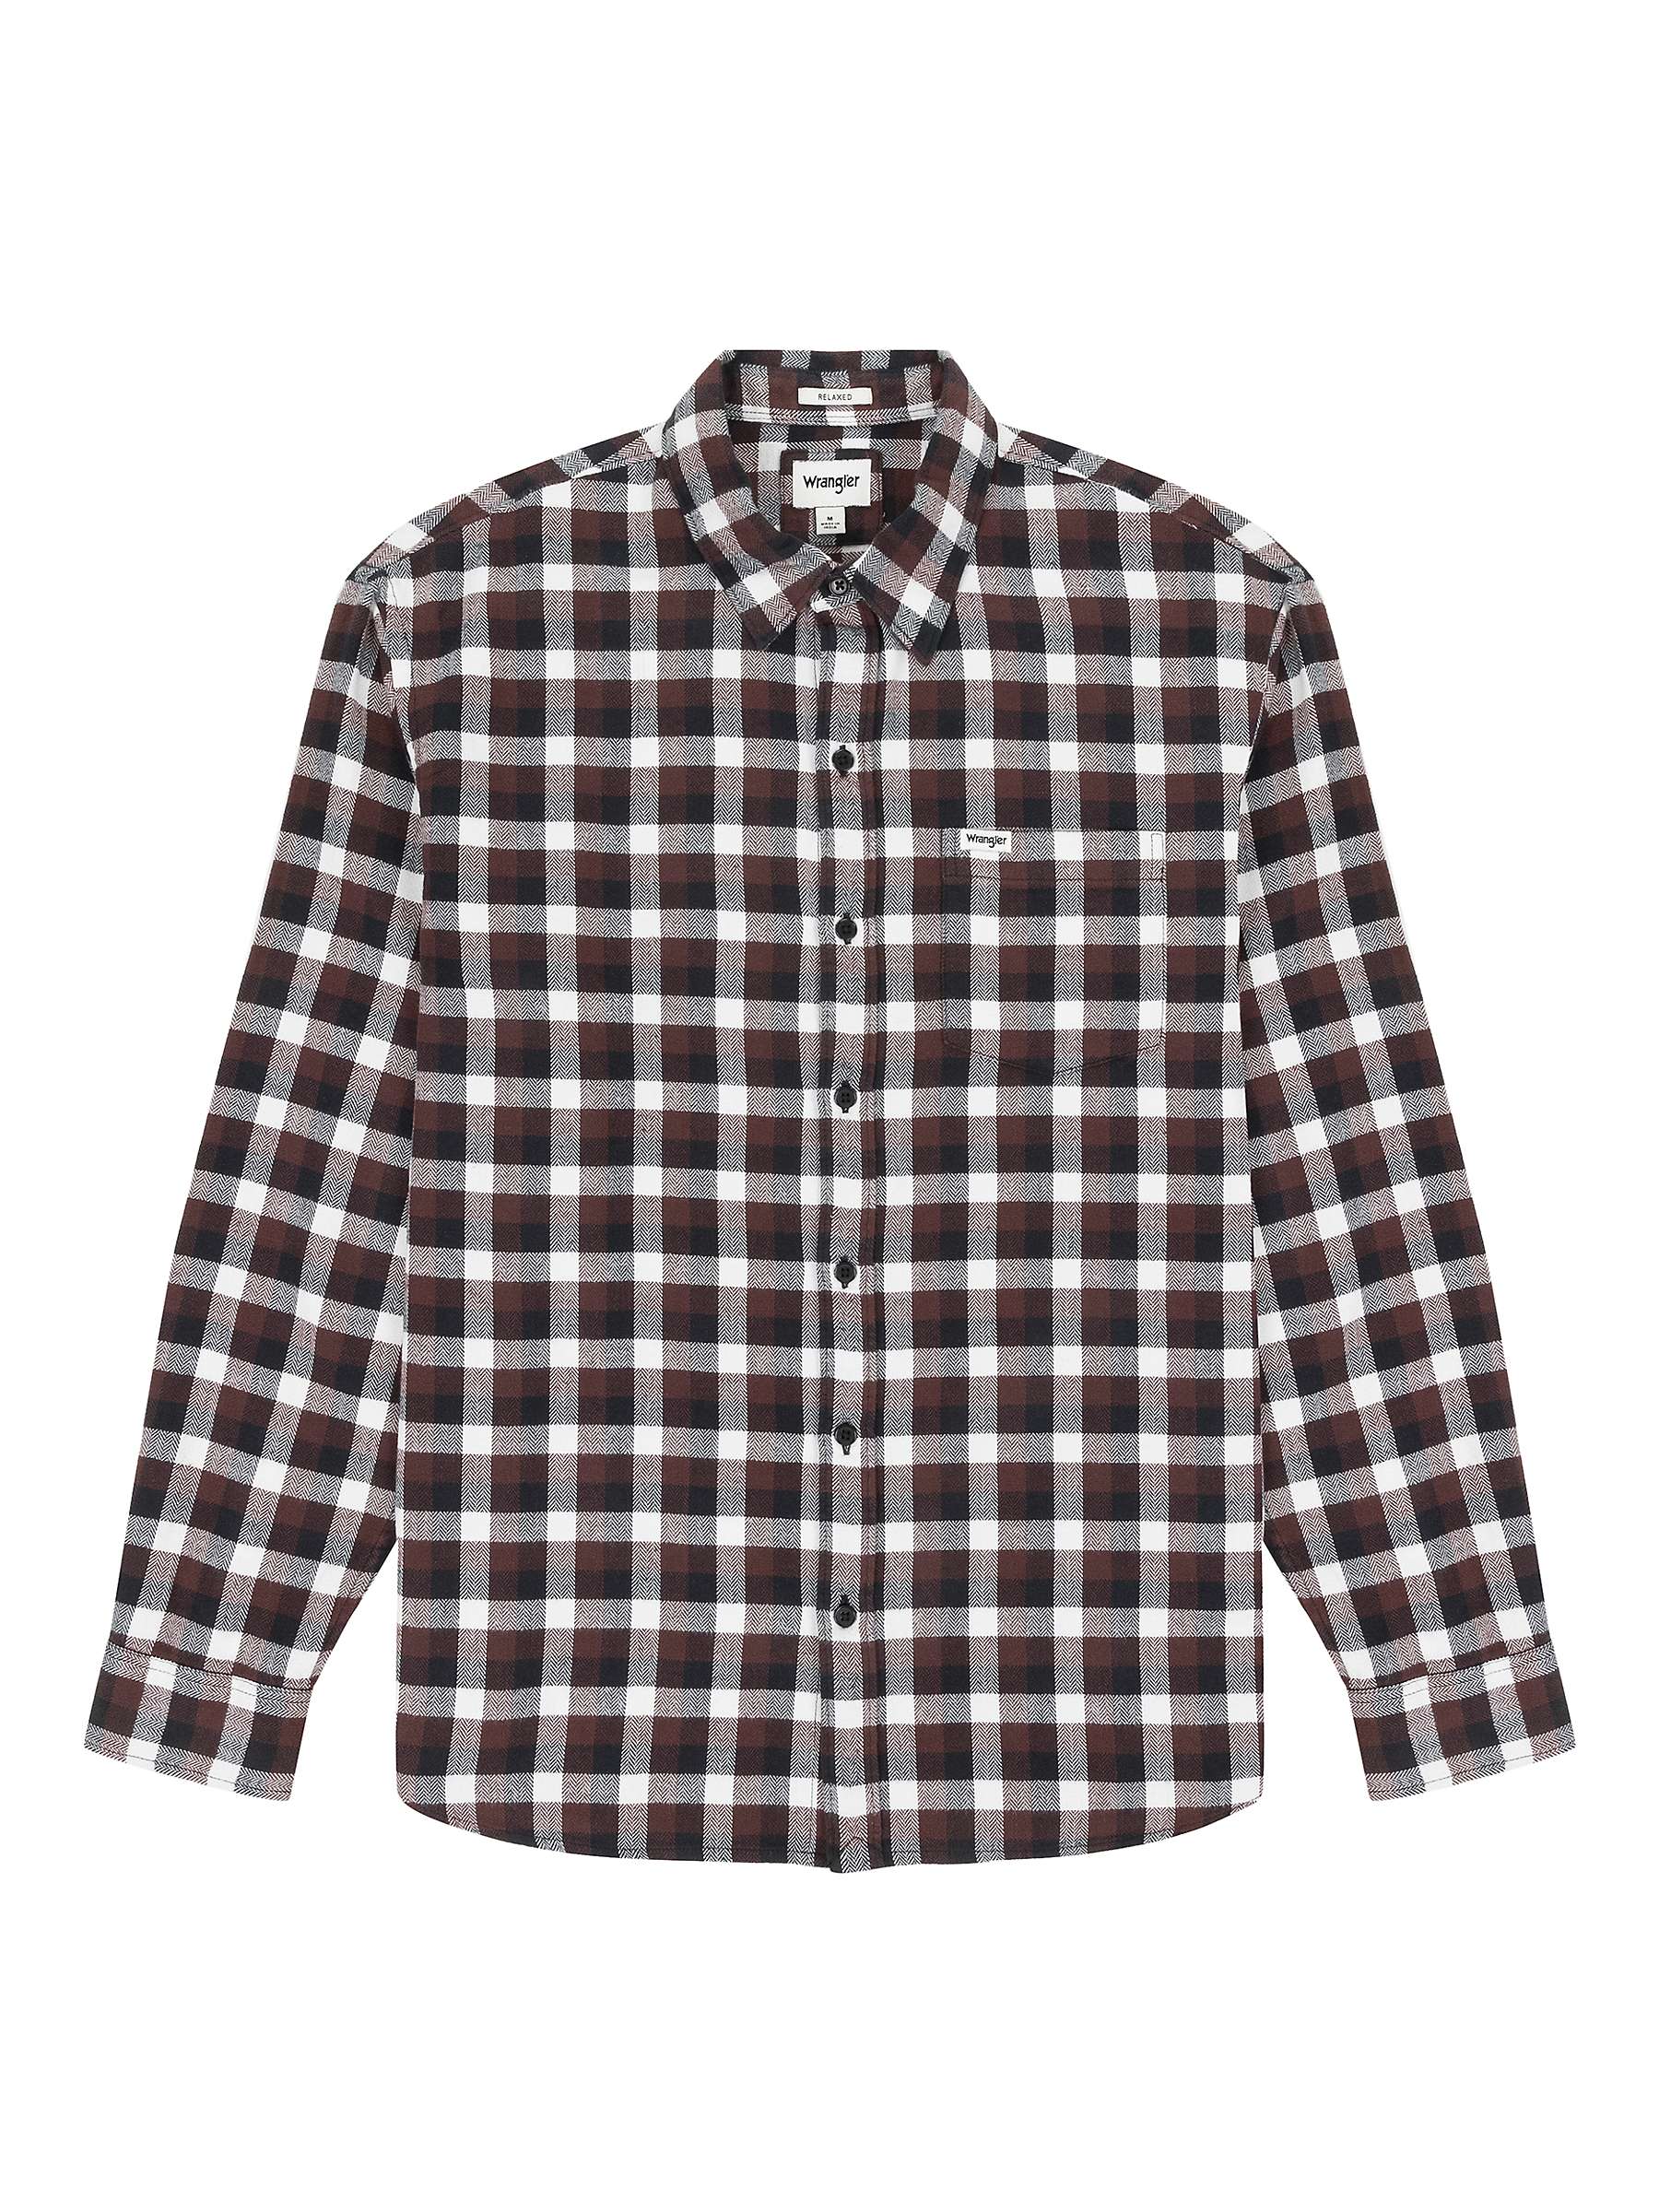 Buy Wrangler Long Sleeve One Pocket Check Shirt, Dahlia Online at johnlewis.com